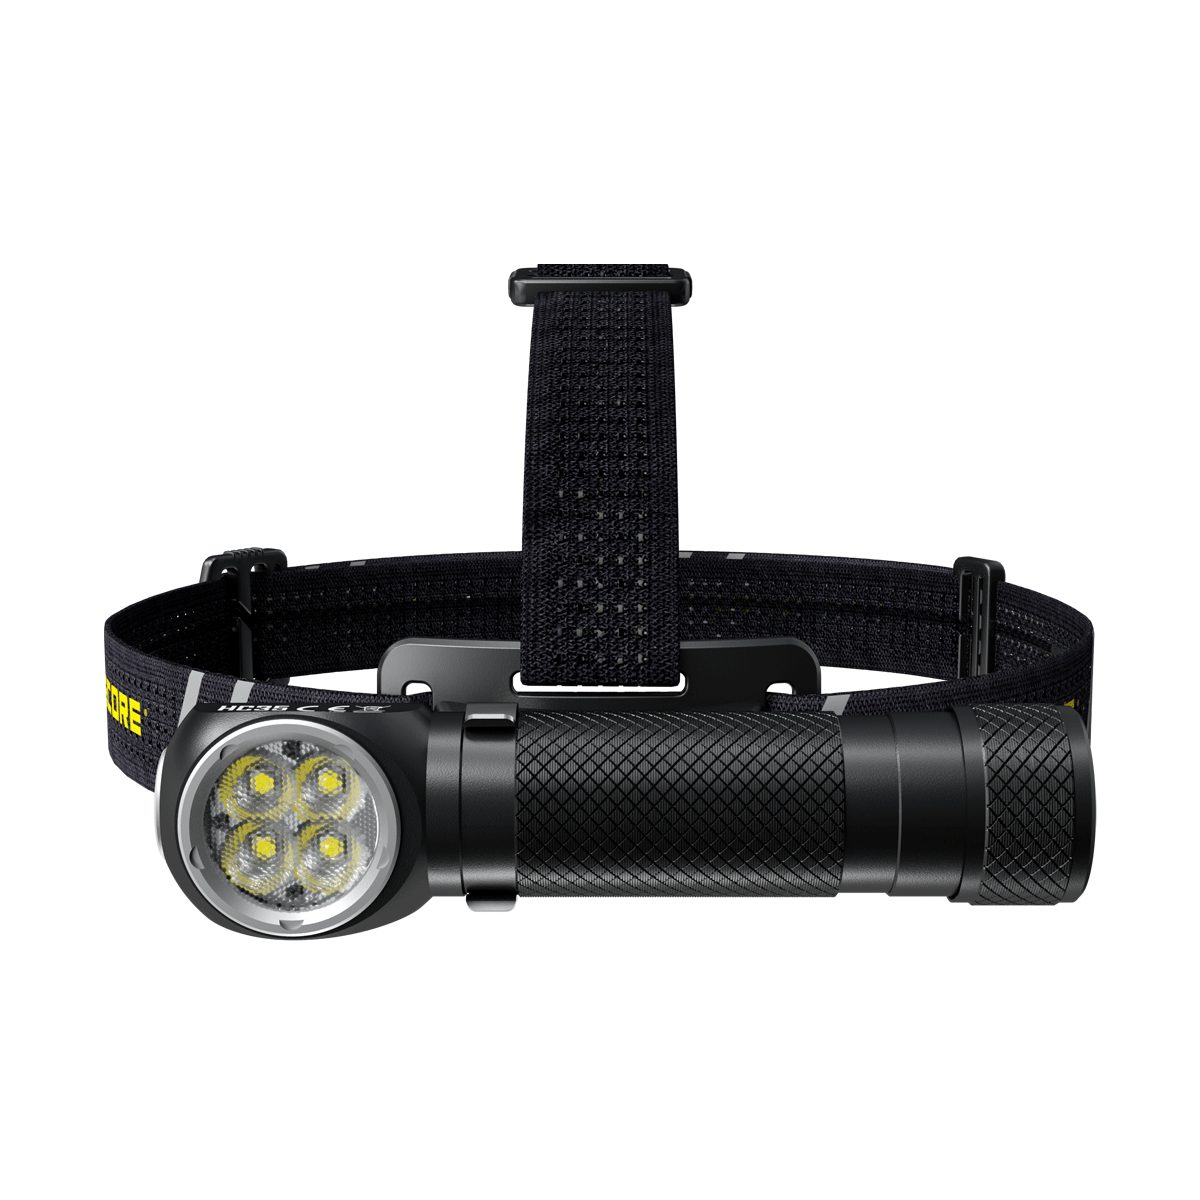 HC35 LED IP68 LED Aufladbar Stirnlampe (1-St) 2700 Lumen USB - Stirnlampe Nitecore Kopflampe